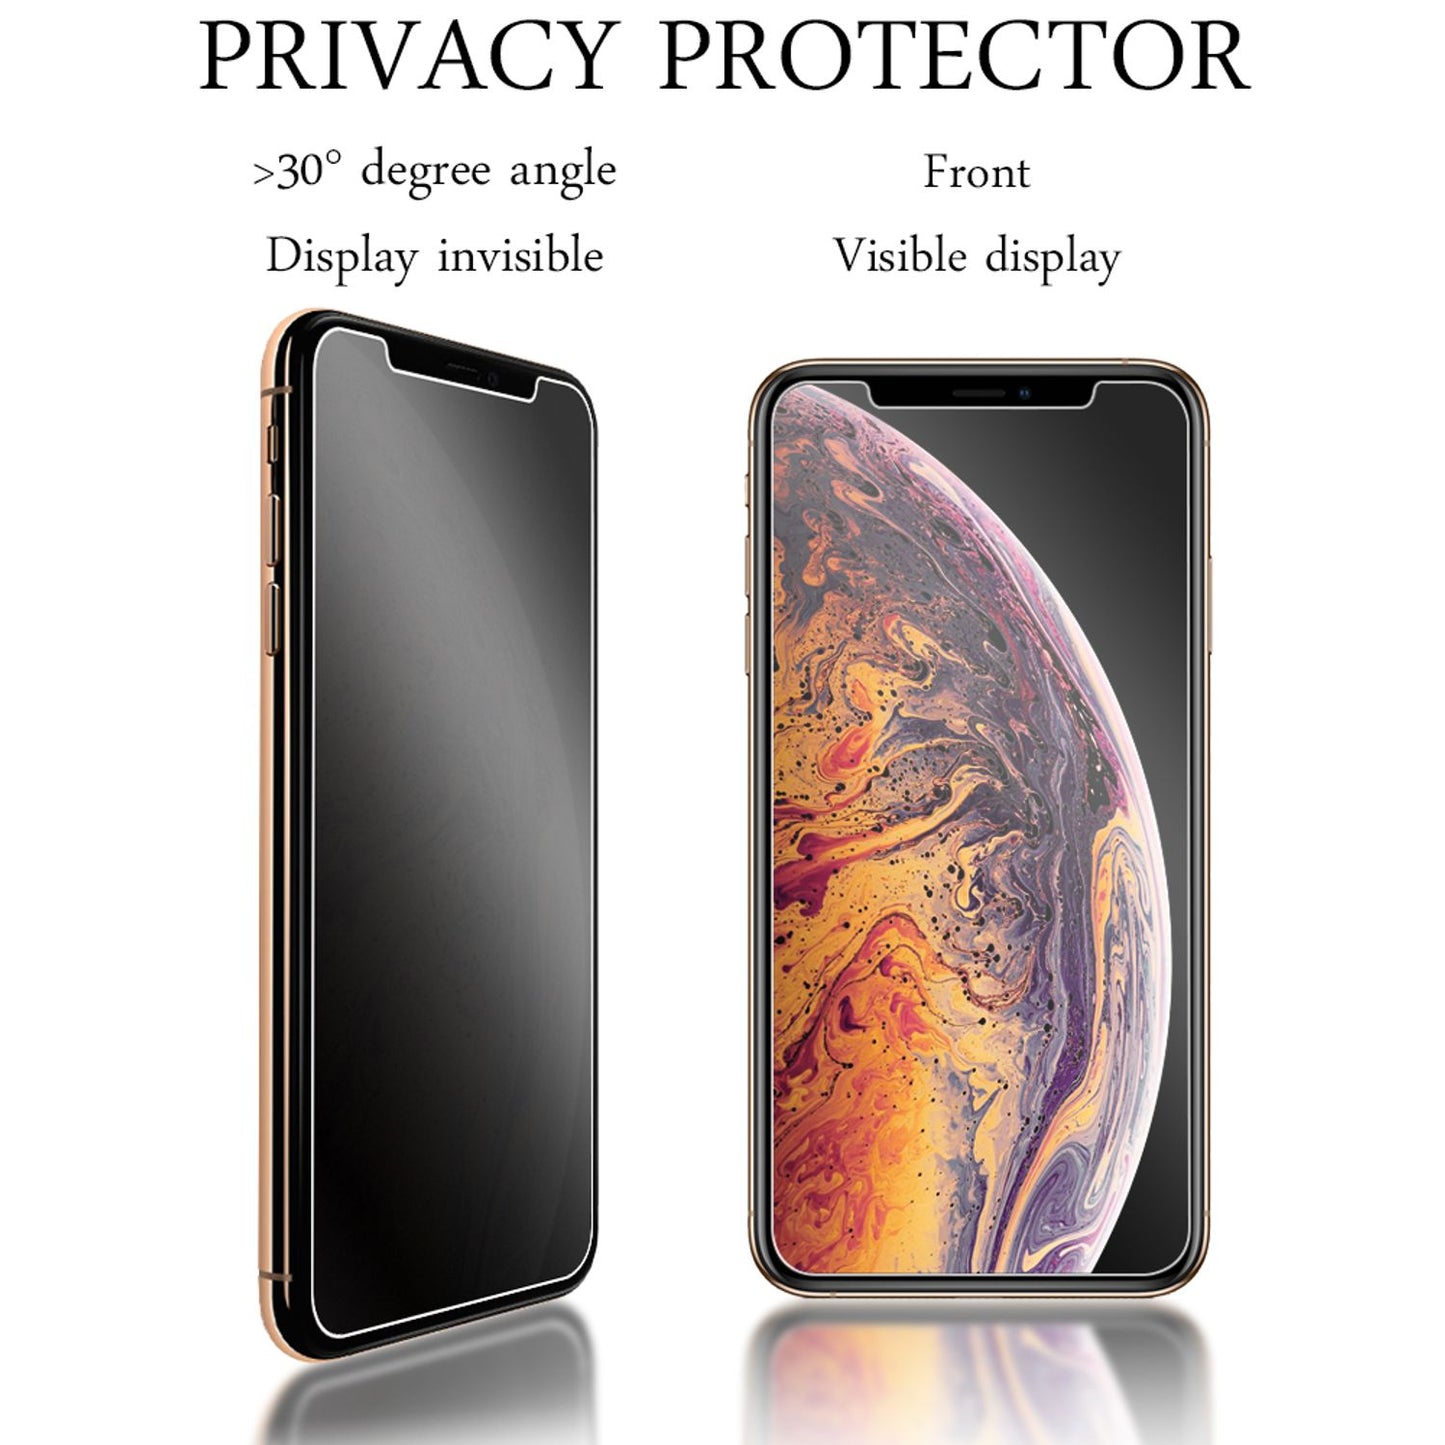 NALIA Sicht Schutzglas für iPhone 11 Pro / iPhone X XS, Anti Spy Glas Privacy